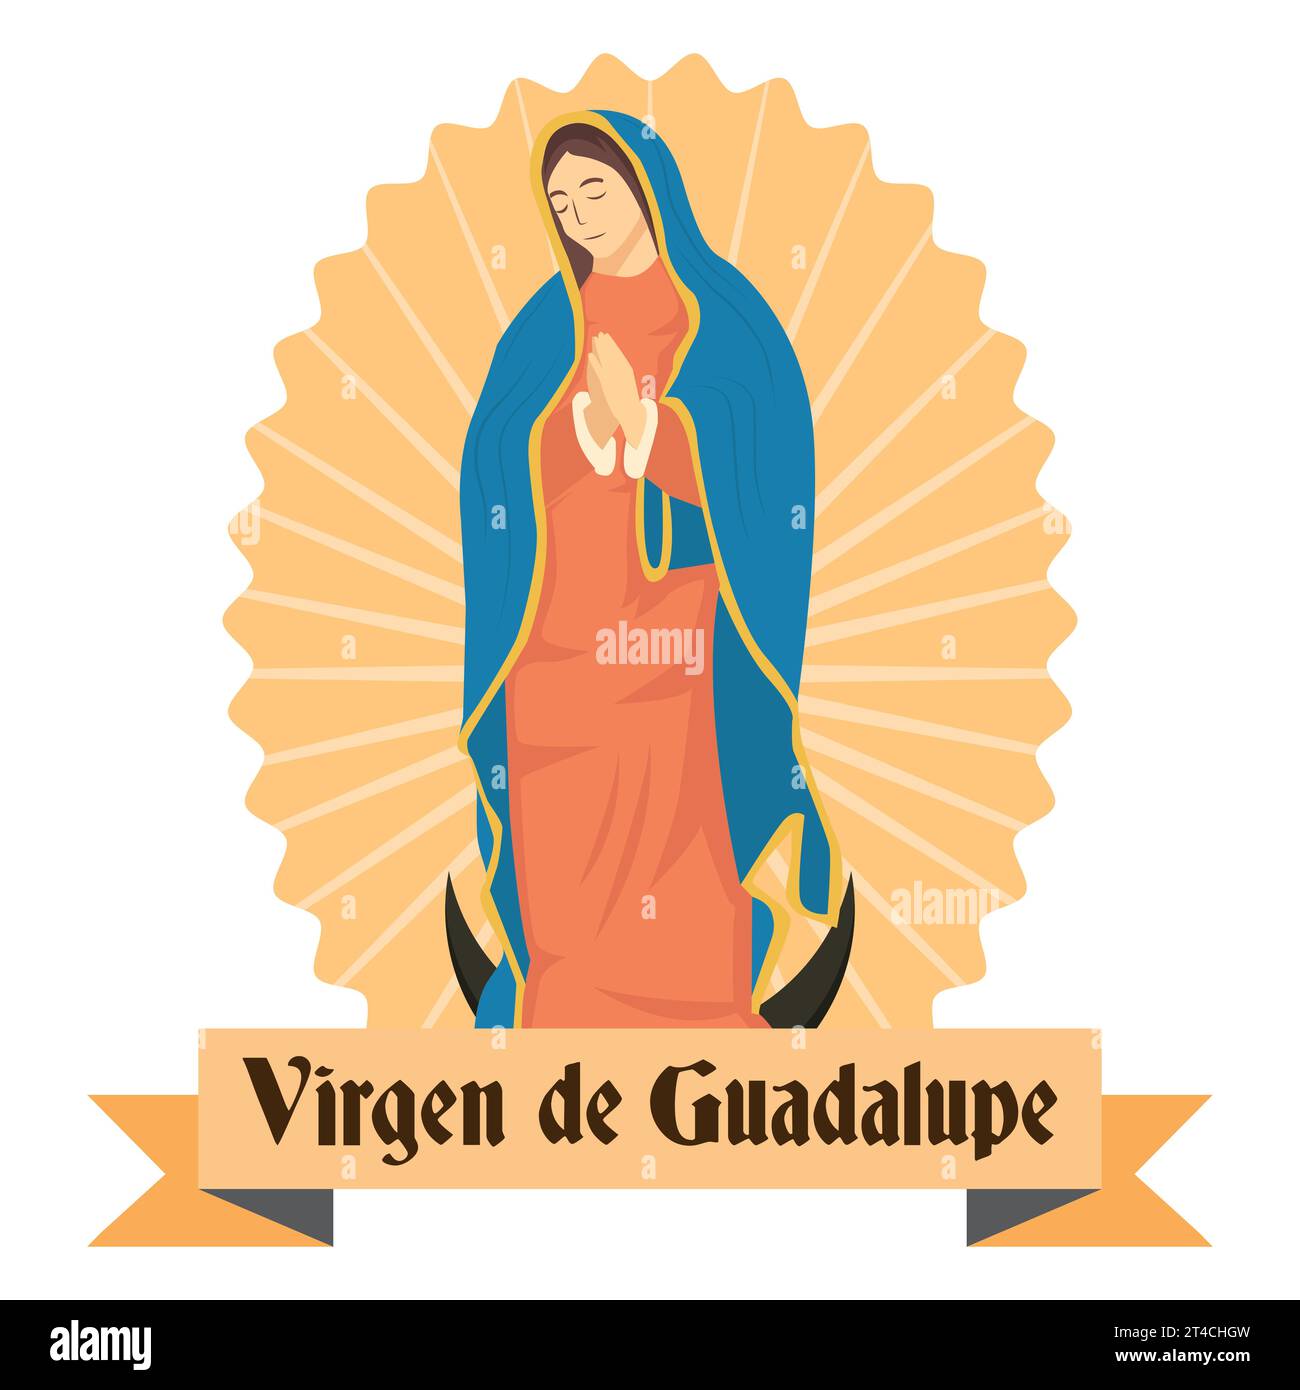 Virgen de Guadalupe illustration in flat style design Stock Vector